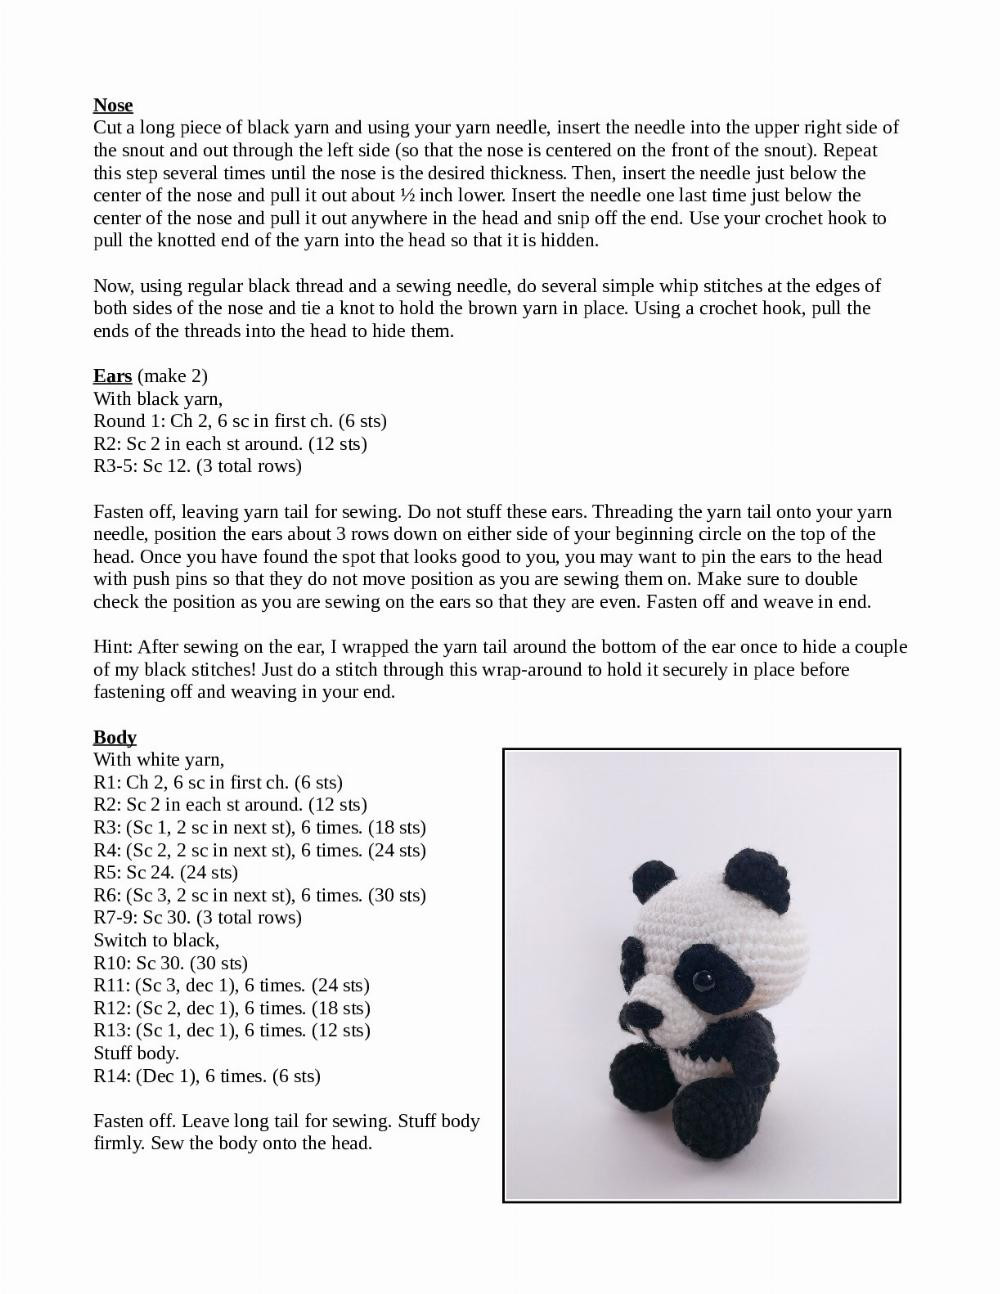 Crocheted Panda Bear pattern